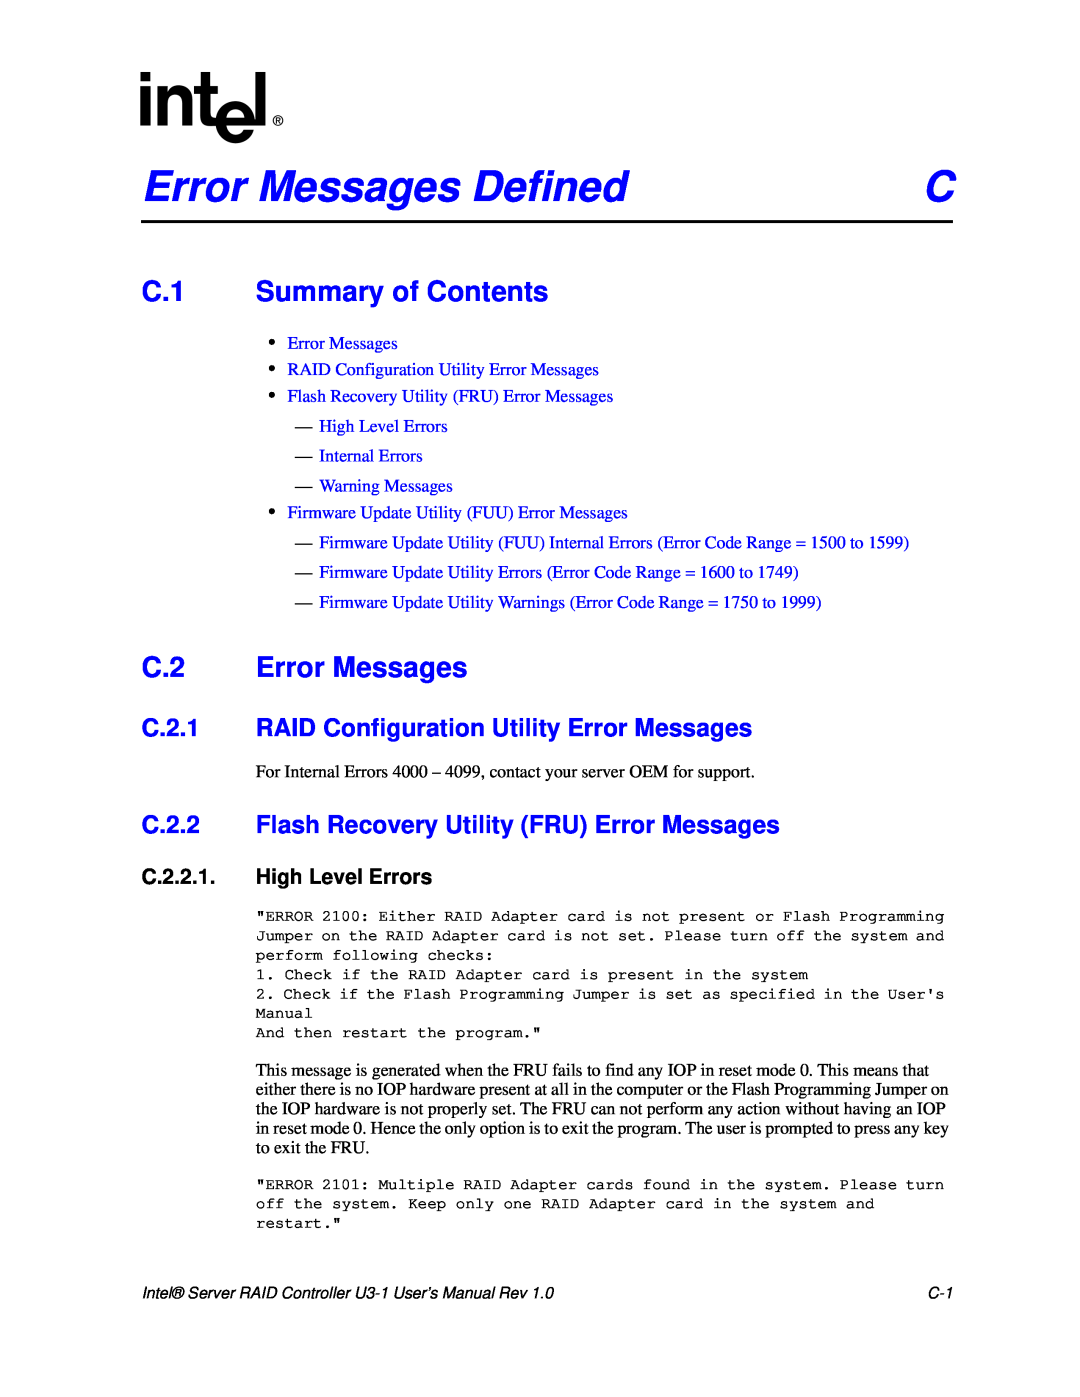 Intel SRCU31 user manual Error Messages Defined, C.1 Summary of Contents, C.2 Error Messages, C.2.2.1. High Level Errors 